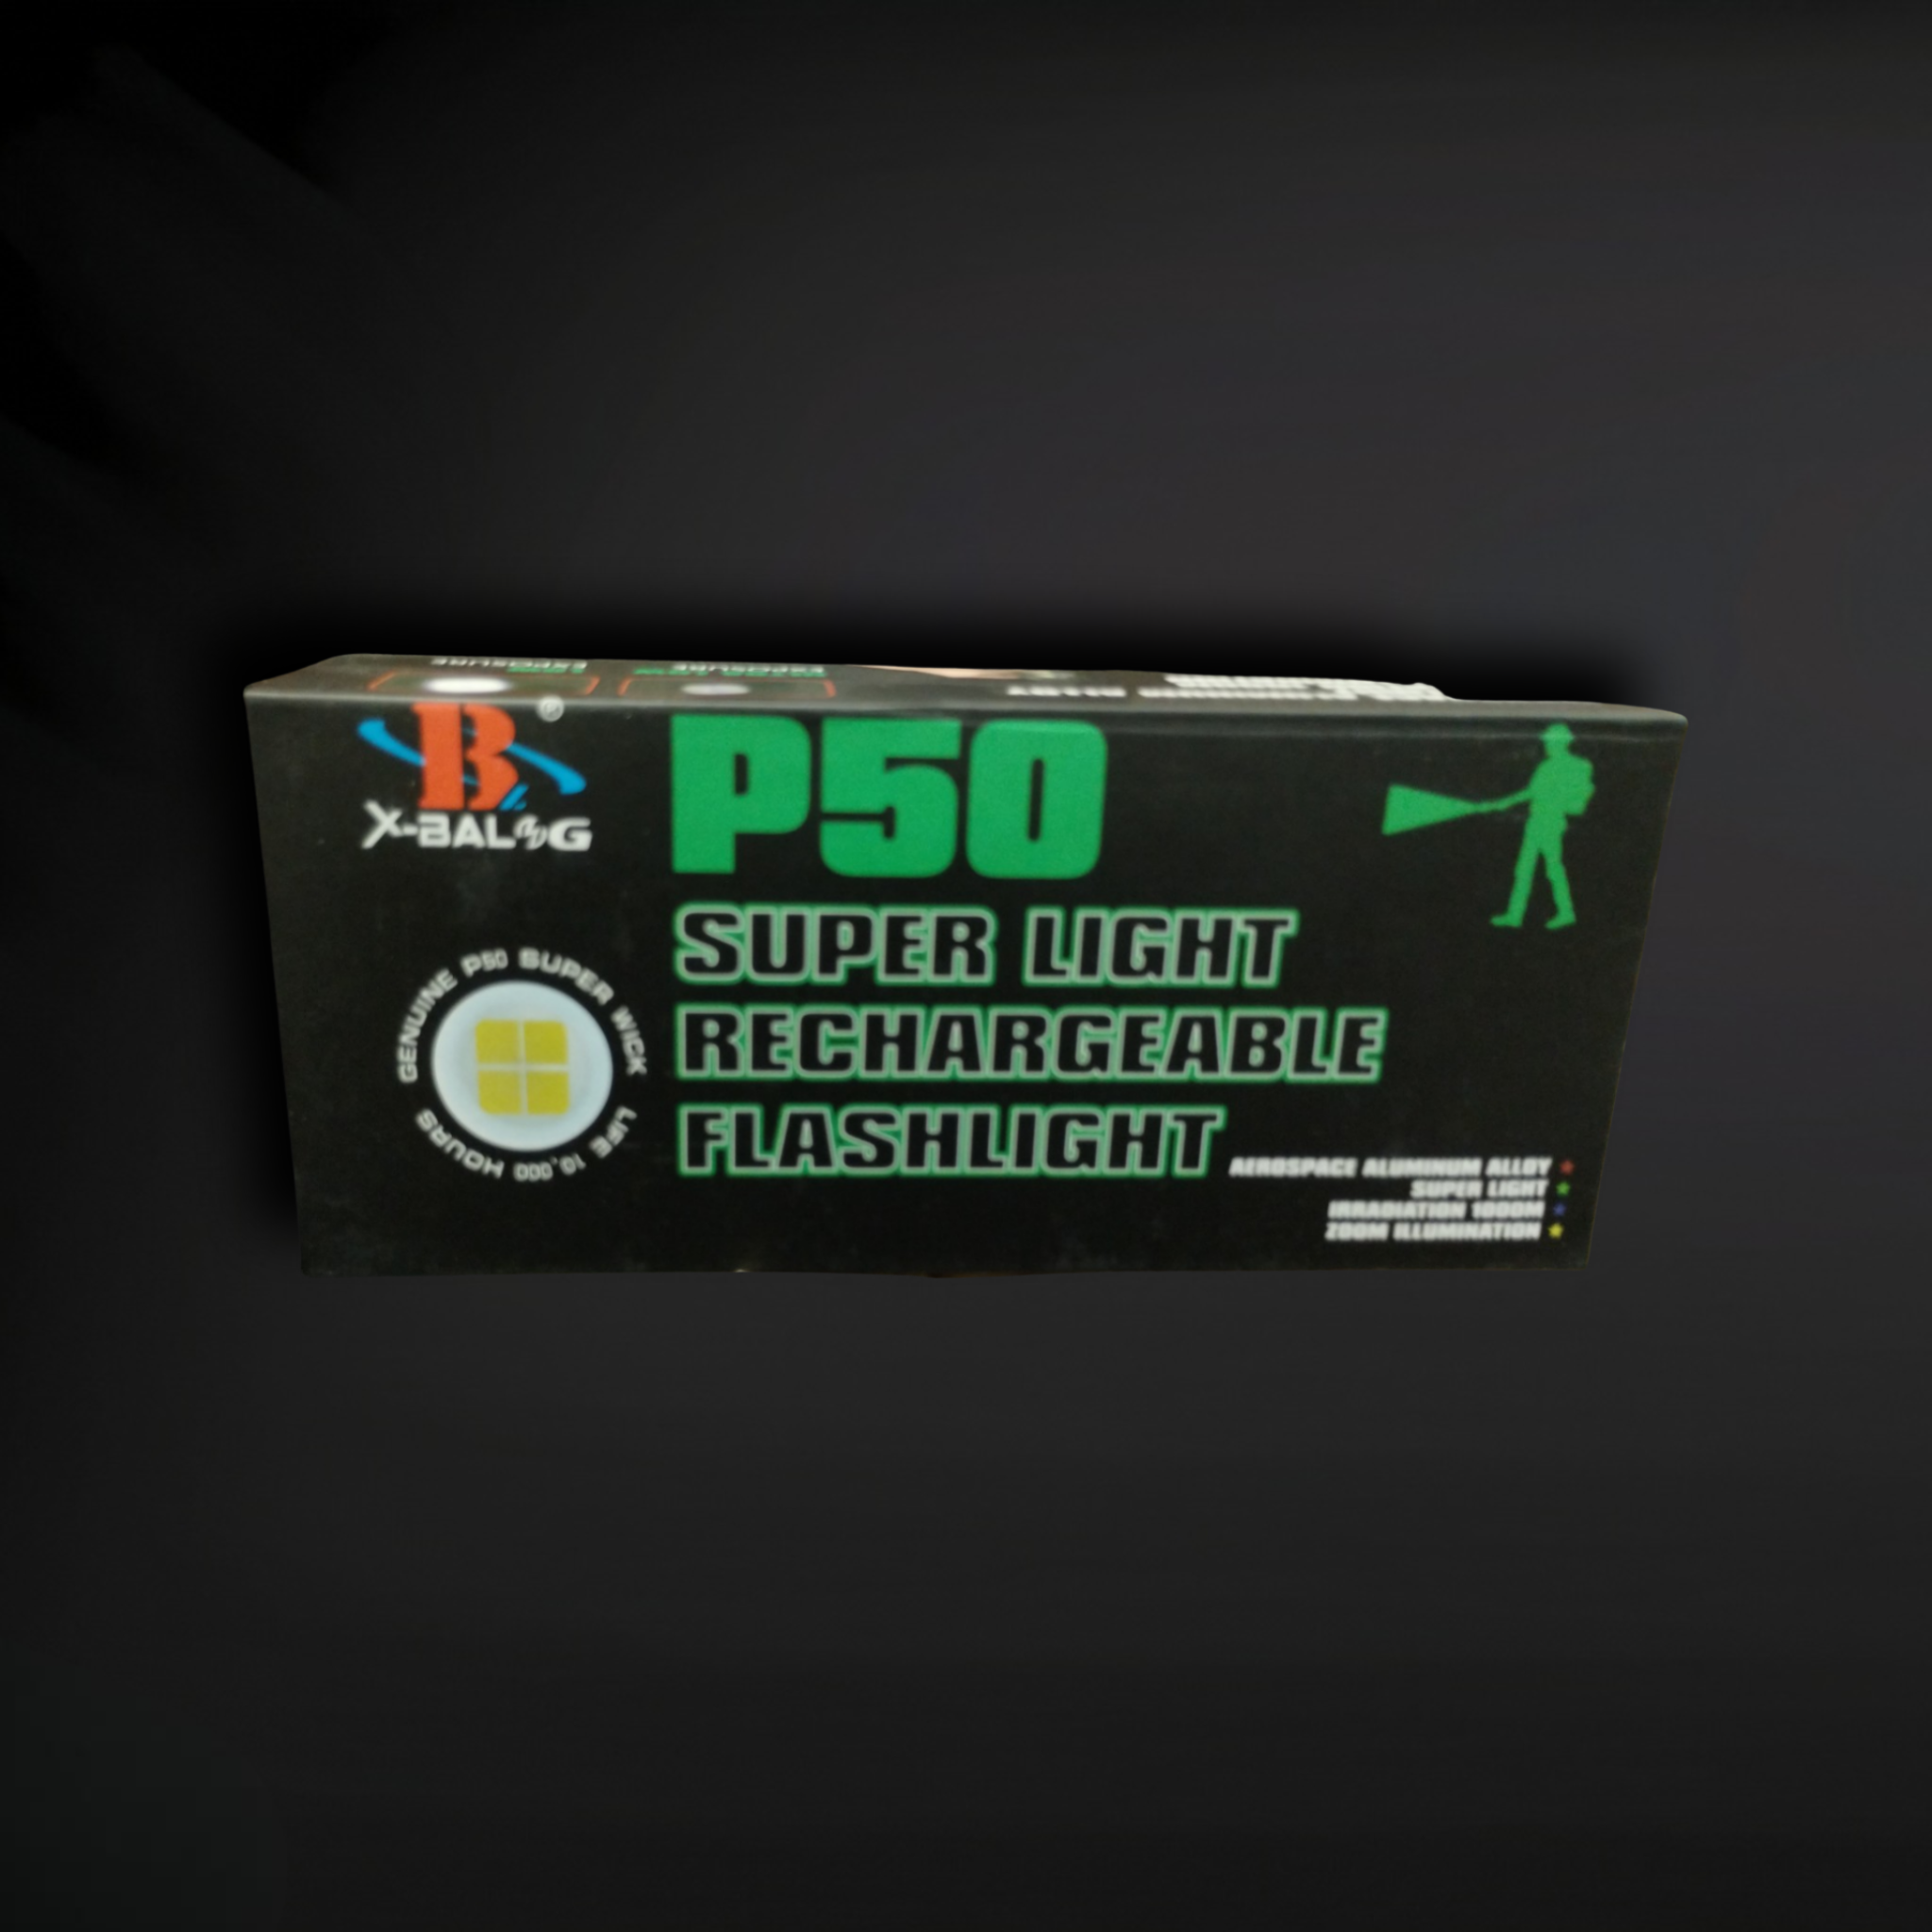 P50 Super Light Rechargeable FLASHLIGHT